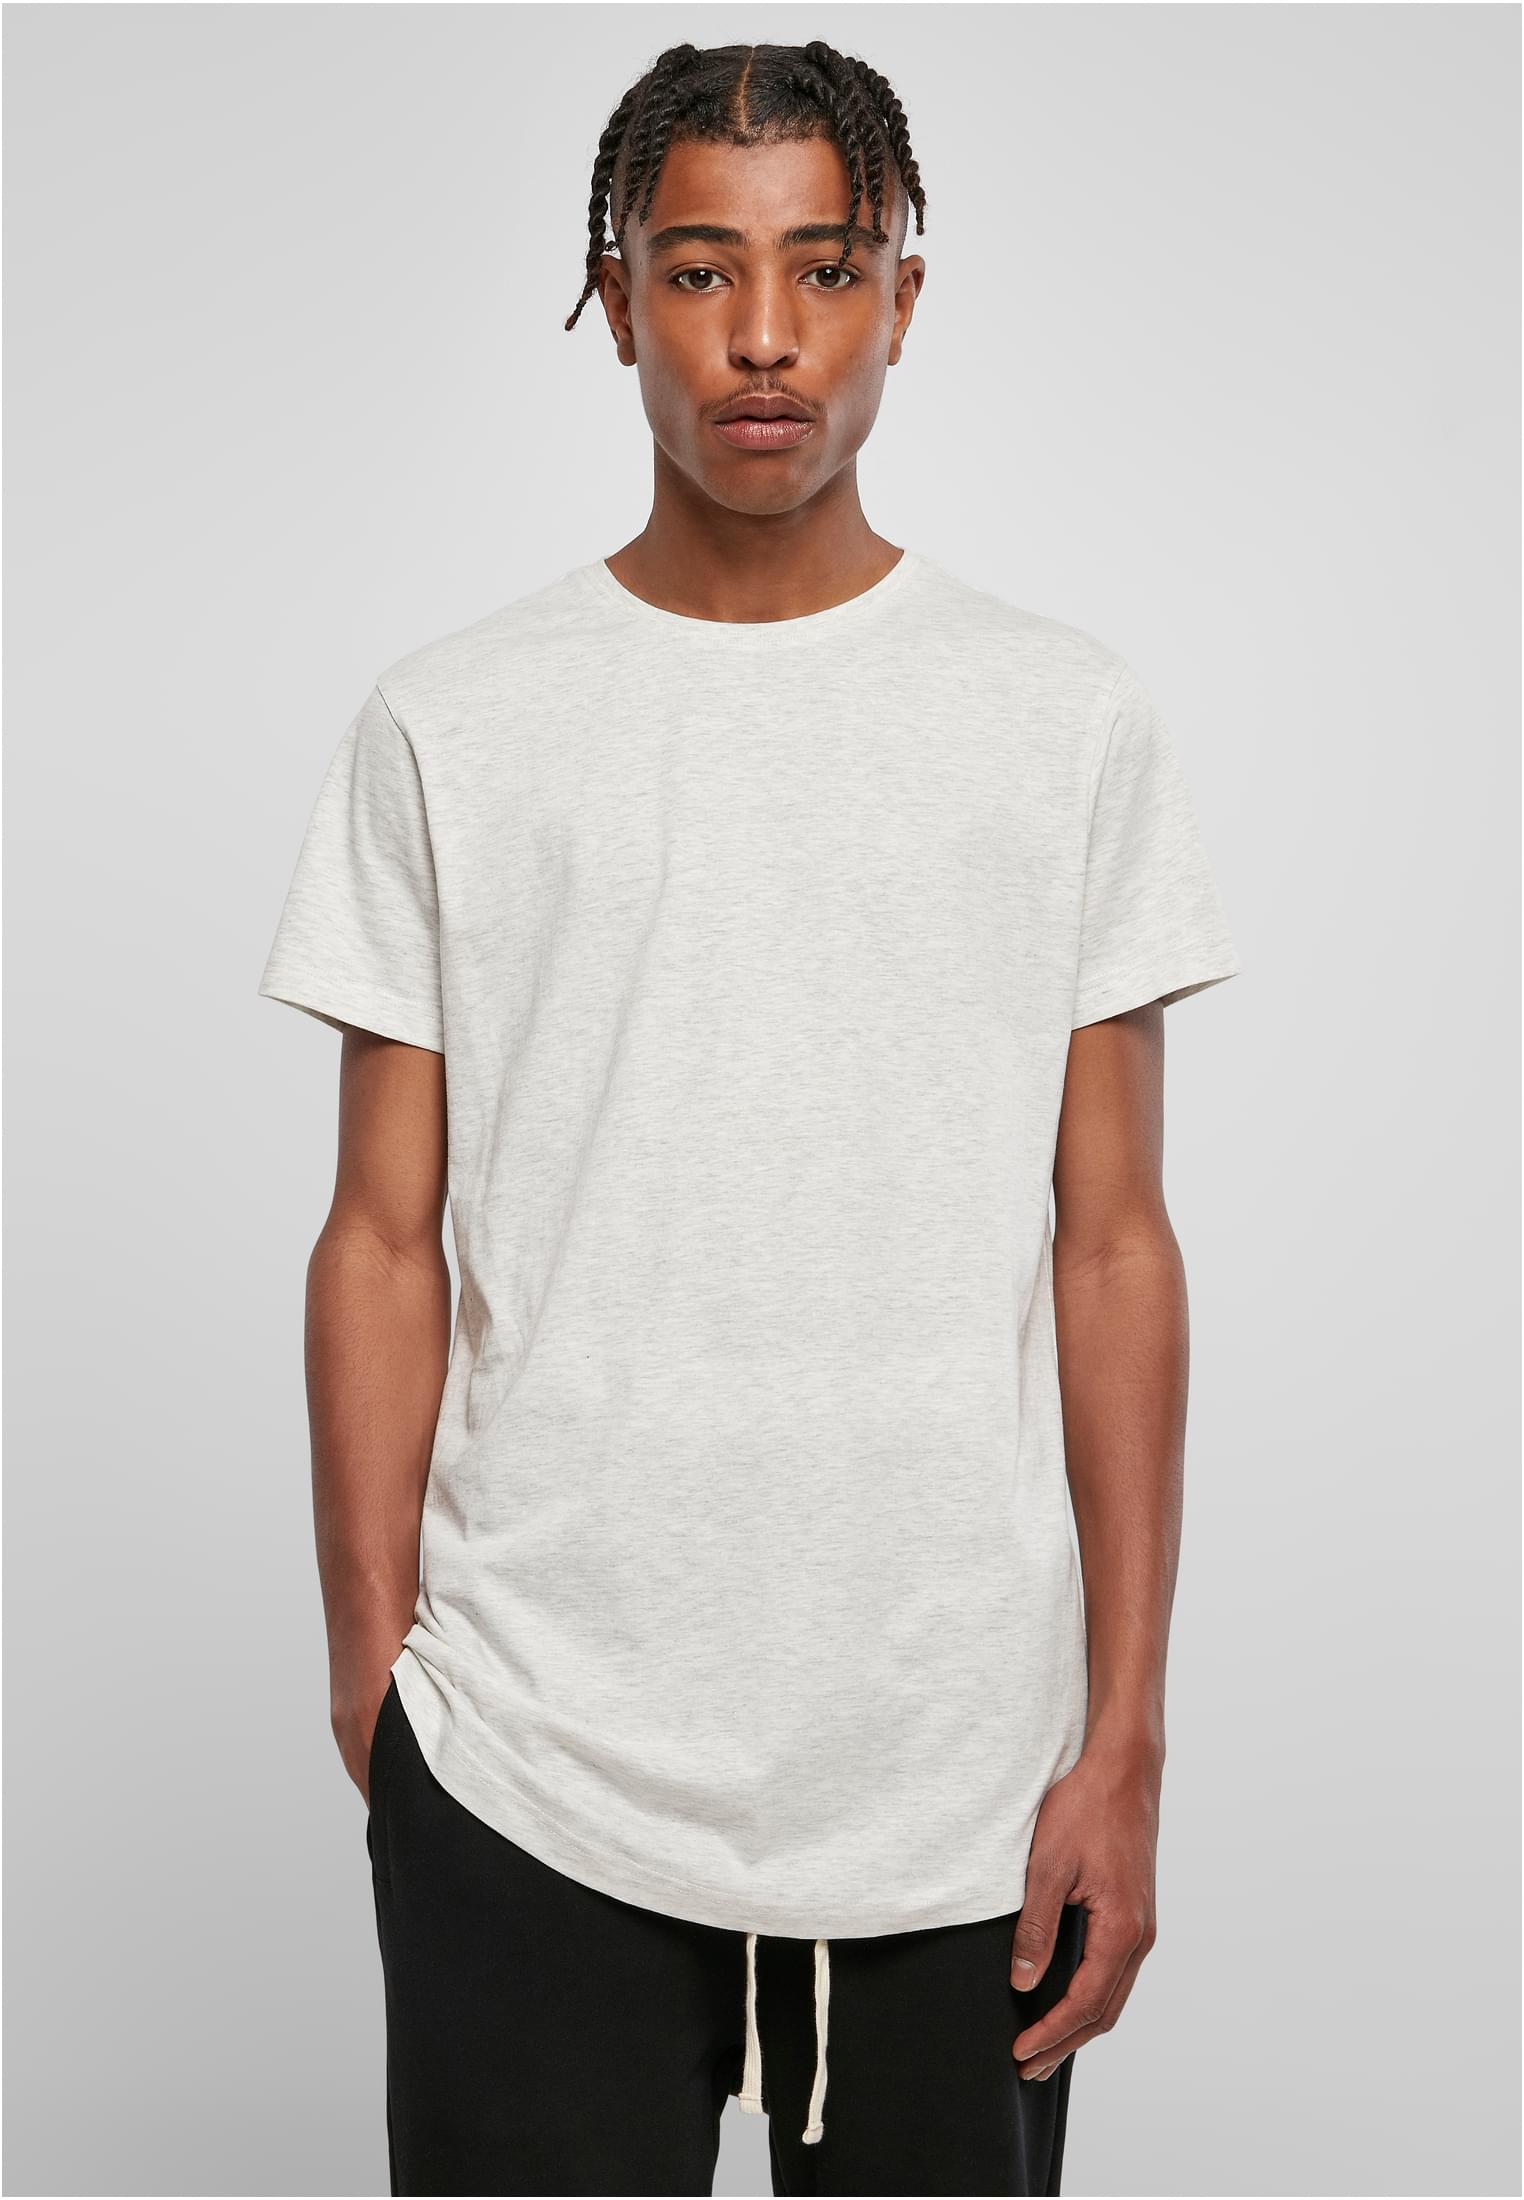 Long T-shirt in the shape of light gray